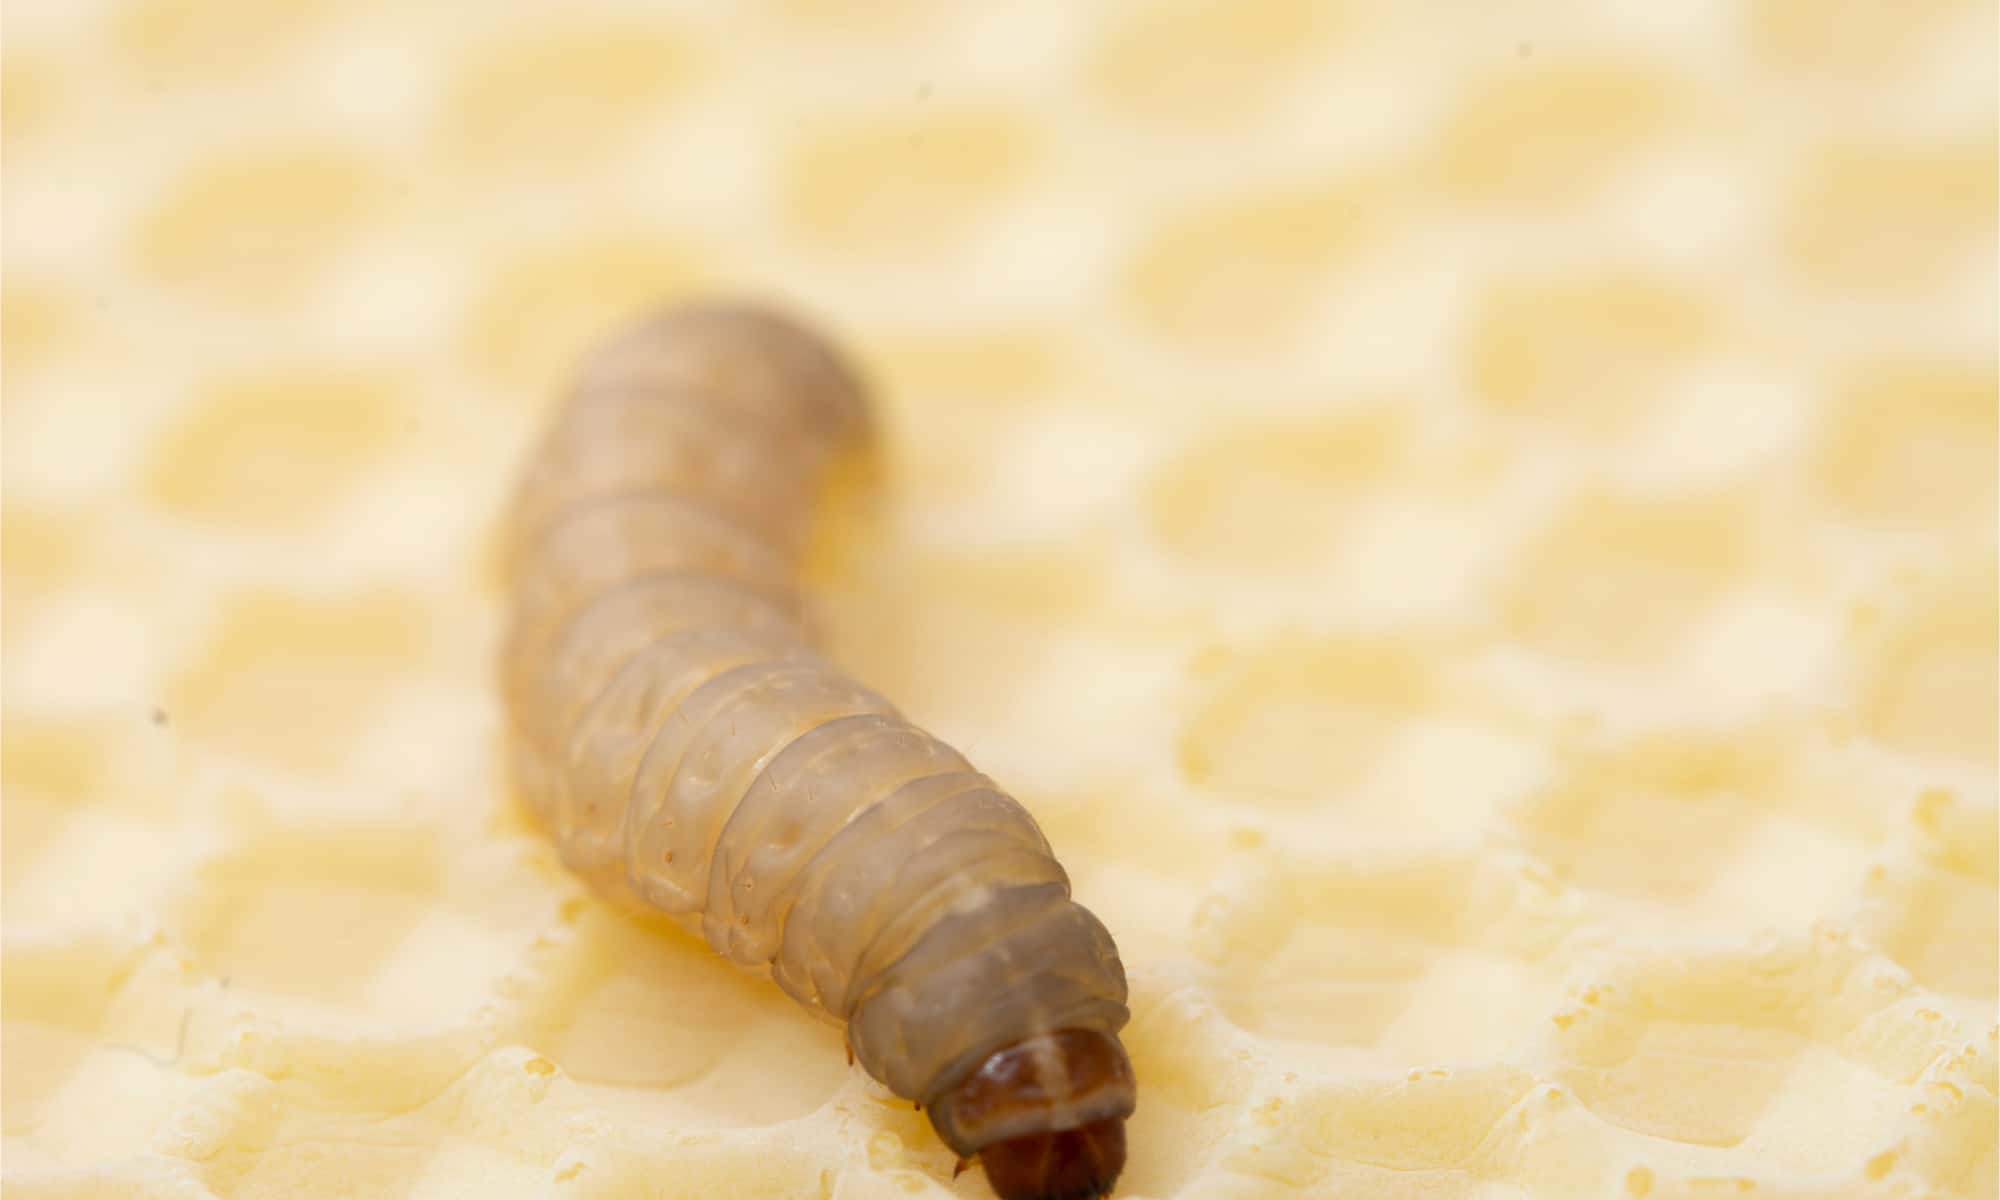 What Do Wax Worms Eat? - AZ Animals